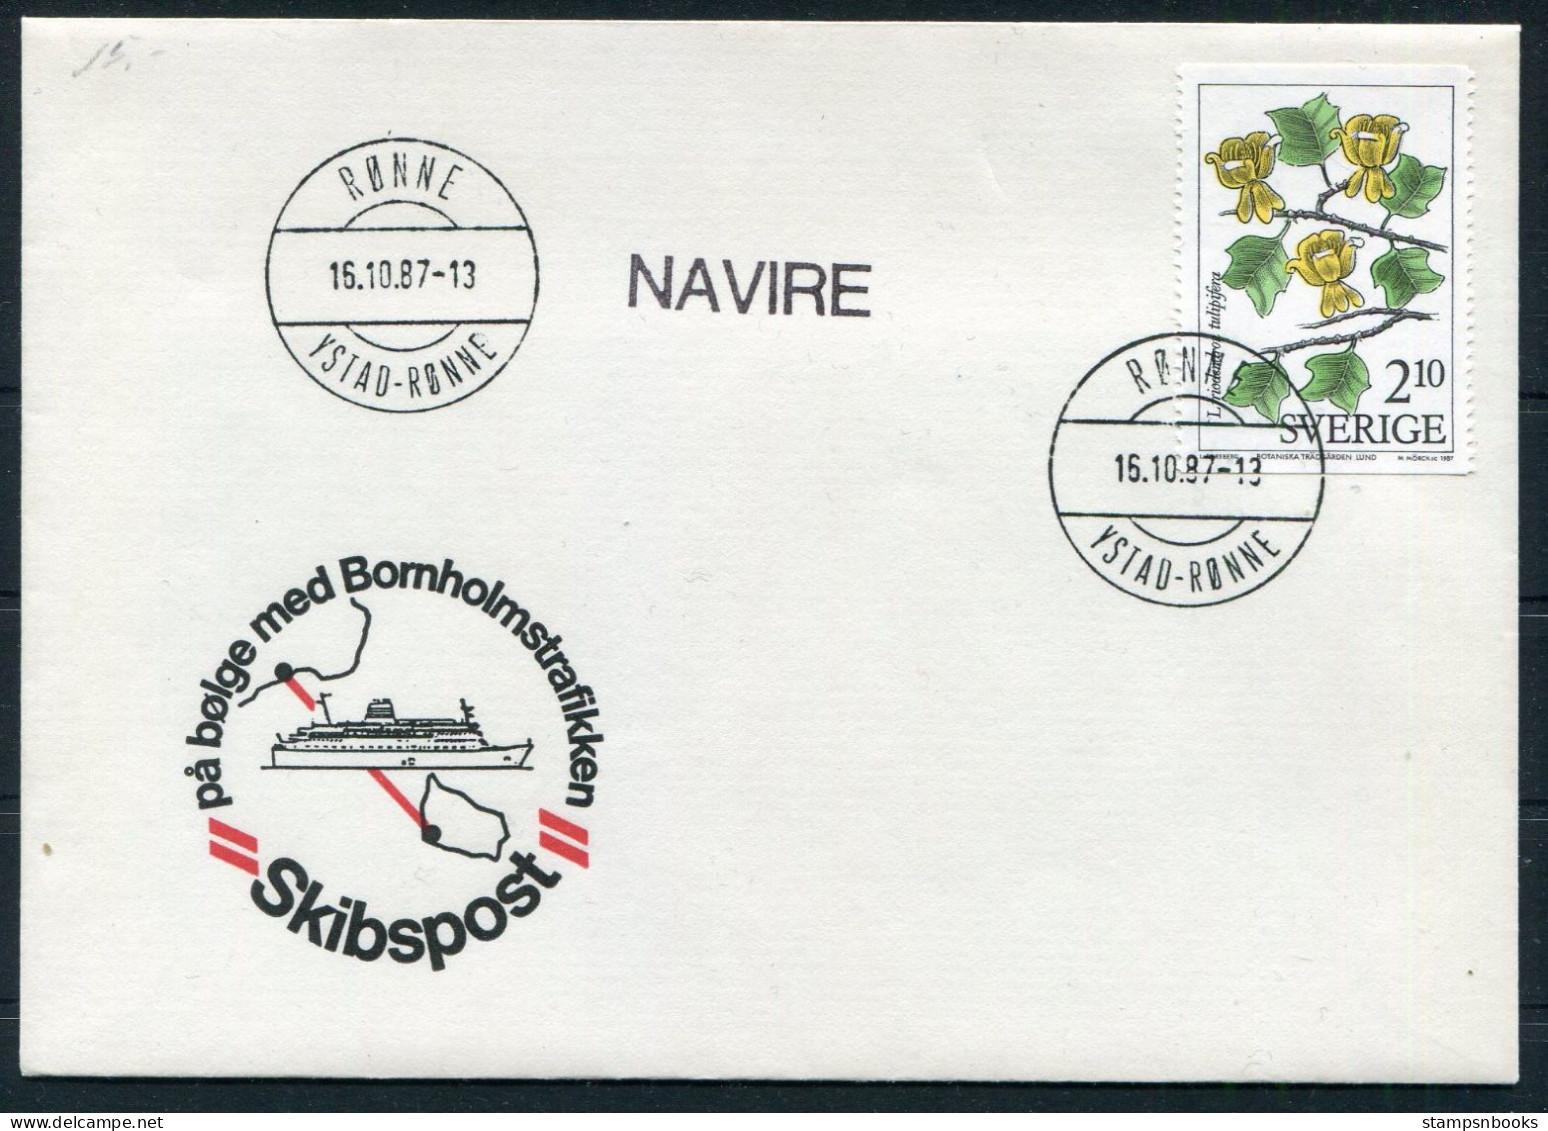 1987 Sweden Denmark Bornholm Ystad - Ronne Ship NAVIRE Skibspost Cover - Covers & Documents